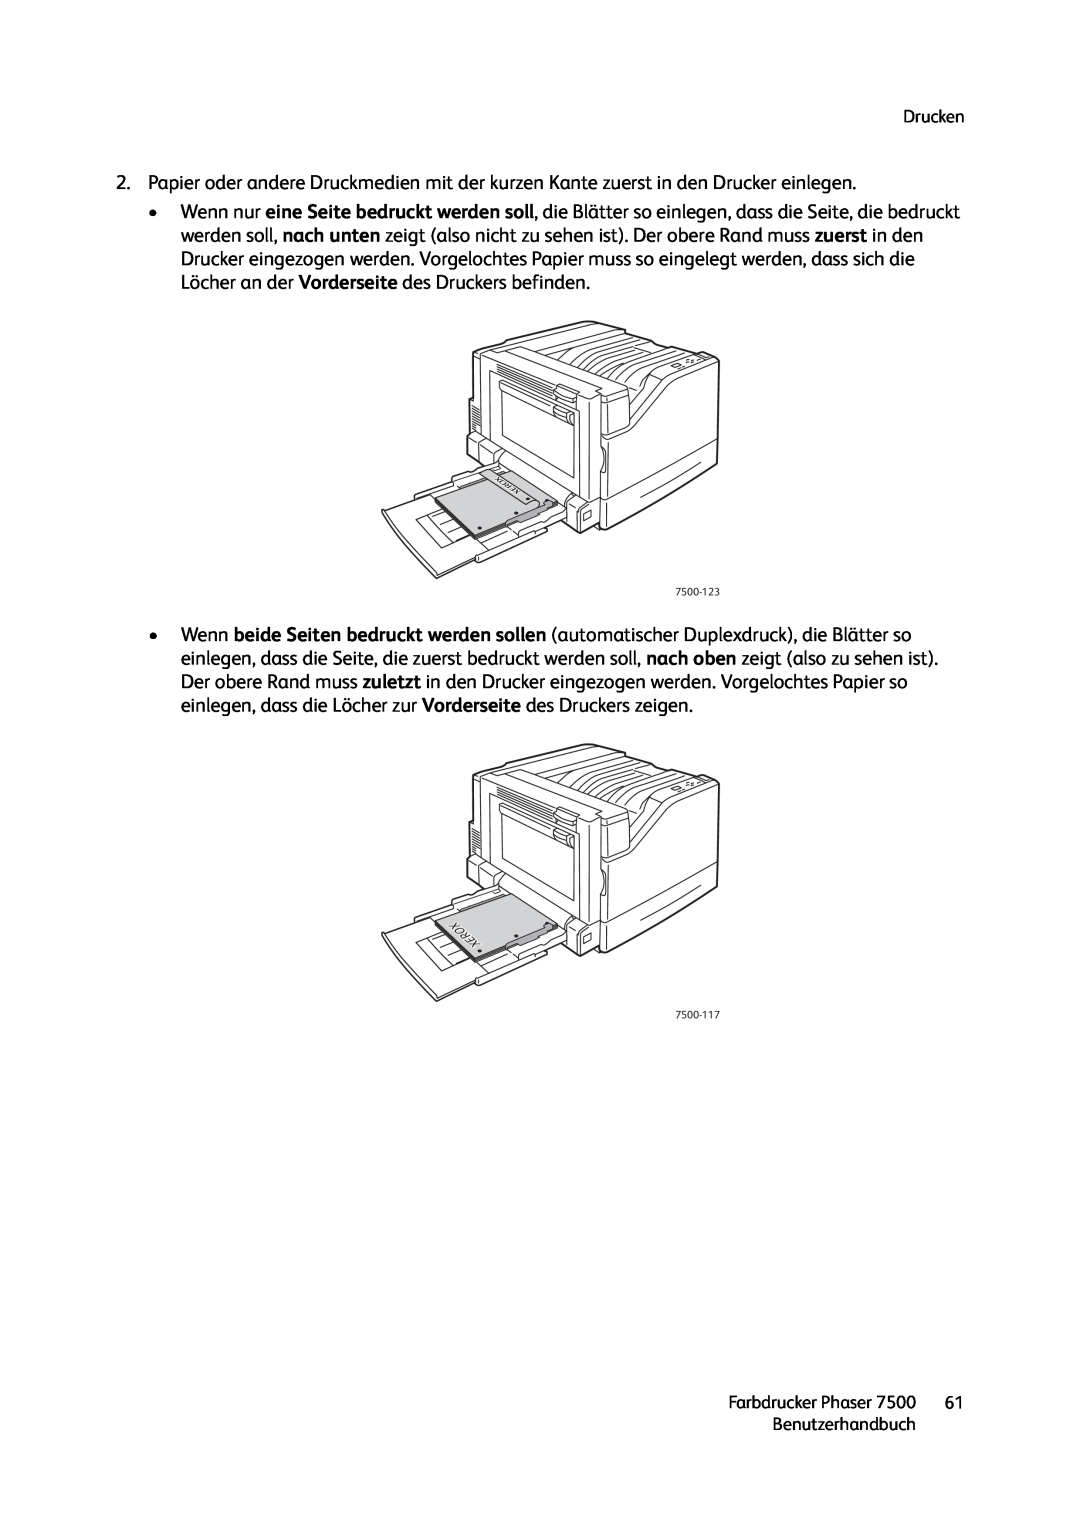 Xerox 7500 color printer manual Drucken, Benutzerhandbuch 